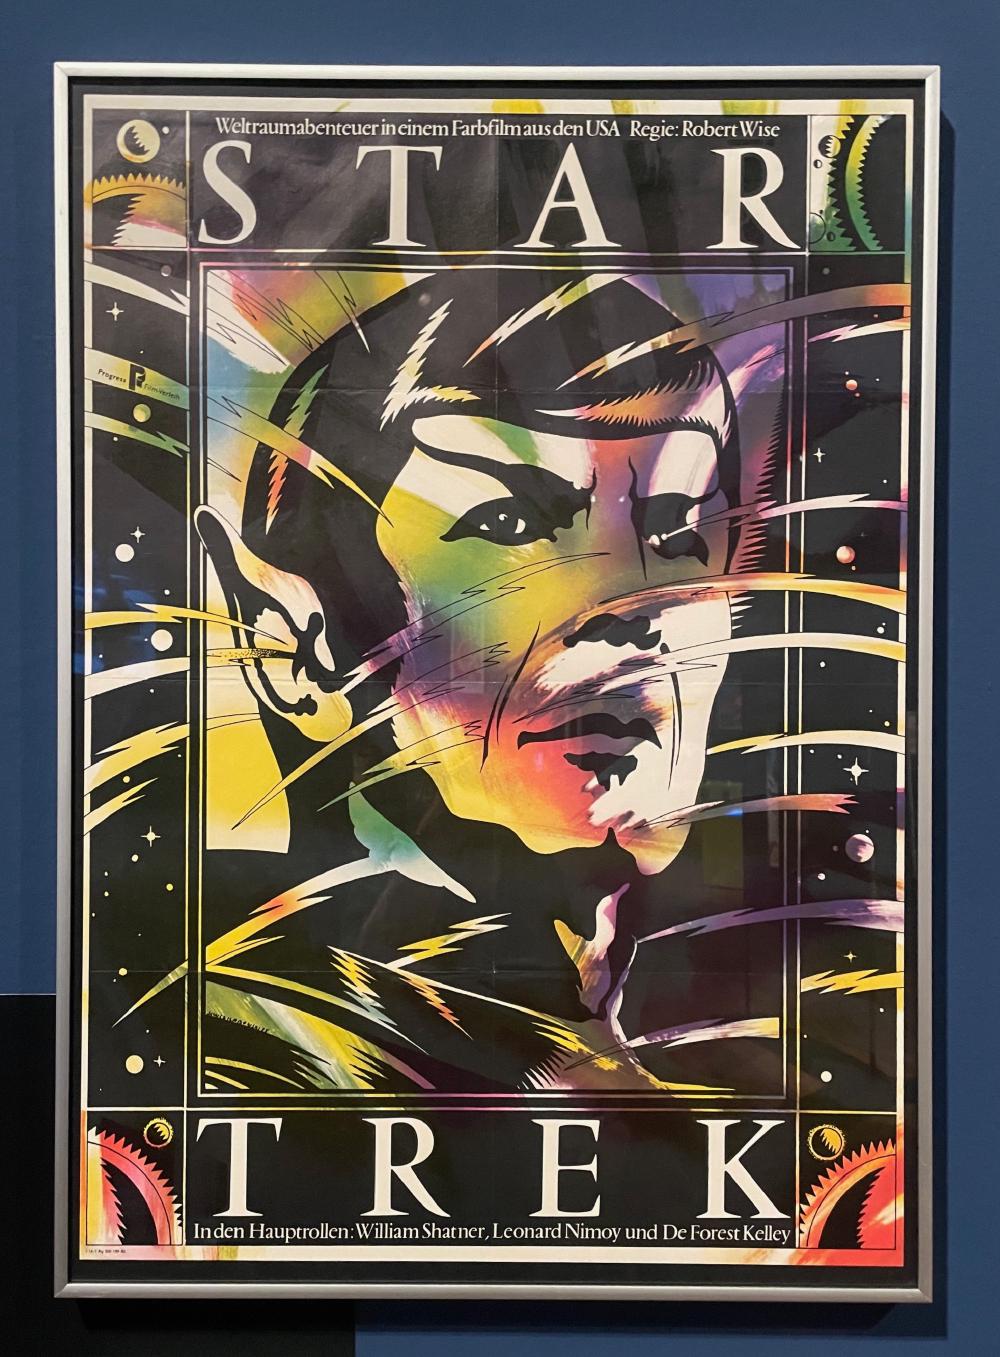 Psychadlic poster for Star Trek, fearturing Spok